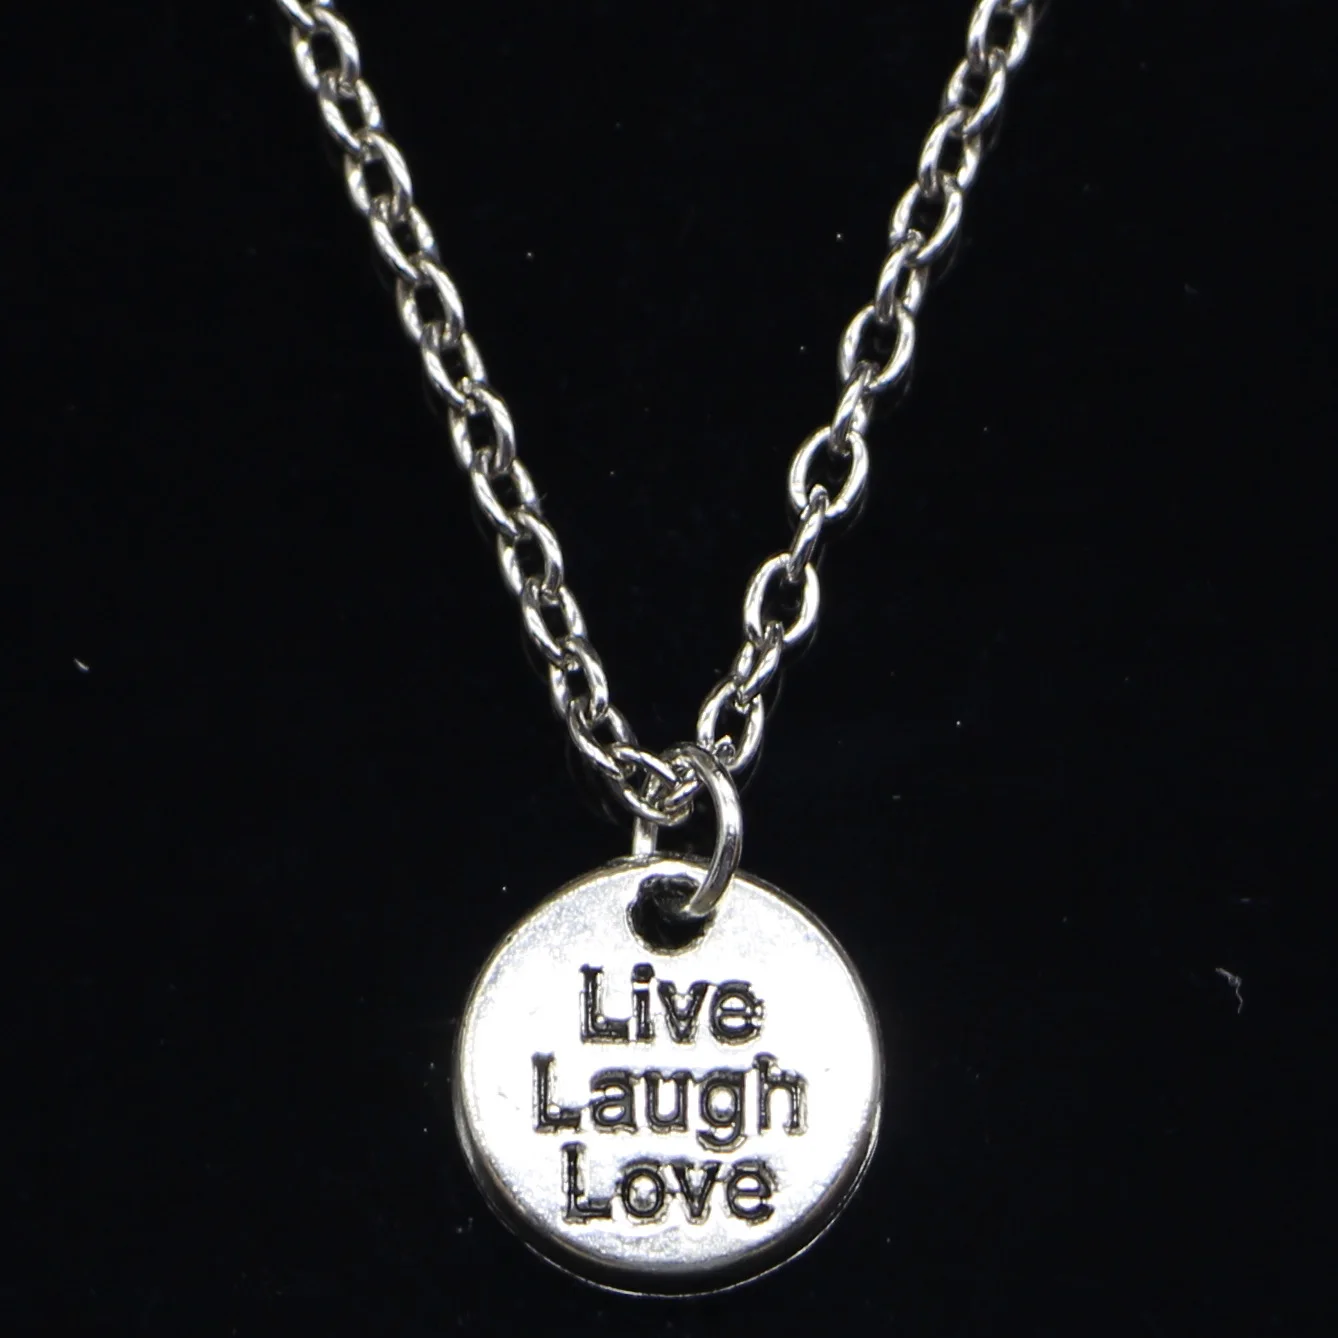 20pcs New Fashion Necklace 12mm plates live laugh love Pendants Short Long  Women Men Colar Gift Jewelry Choker|Chain Necklaces| - AliExpress